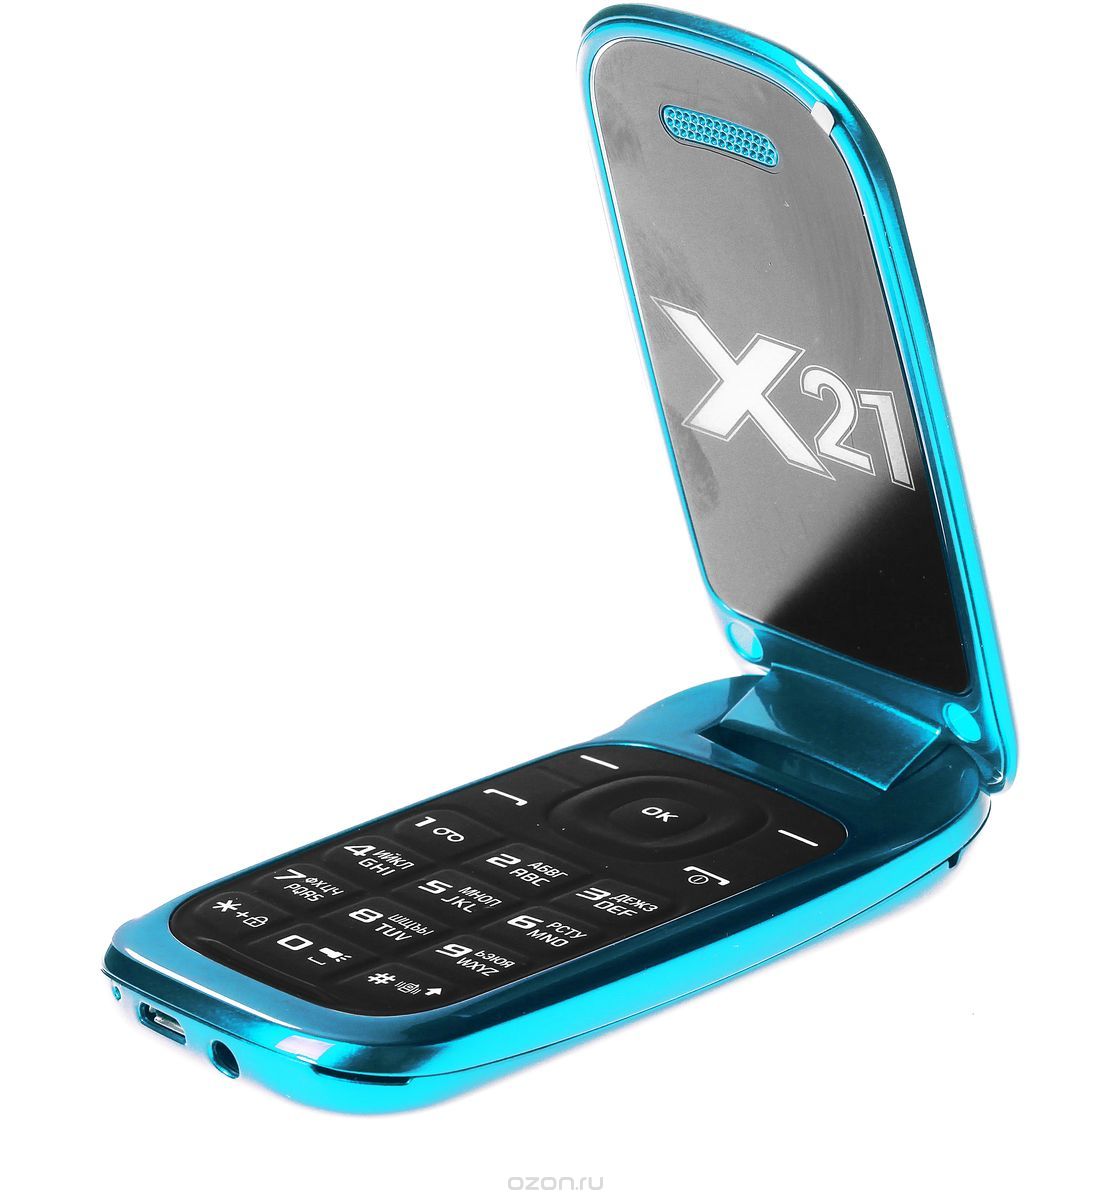 тел.мобильный QUMO Push X21 blue 1,8"LCD 2SIM/MicroSD/BT MP3/MP4